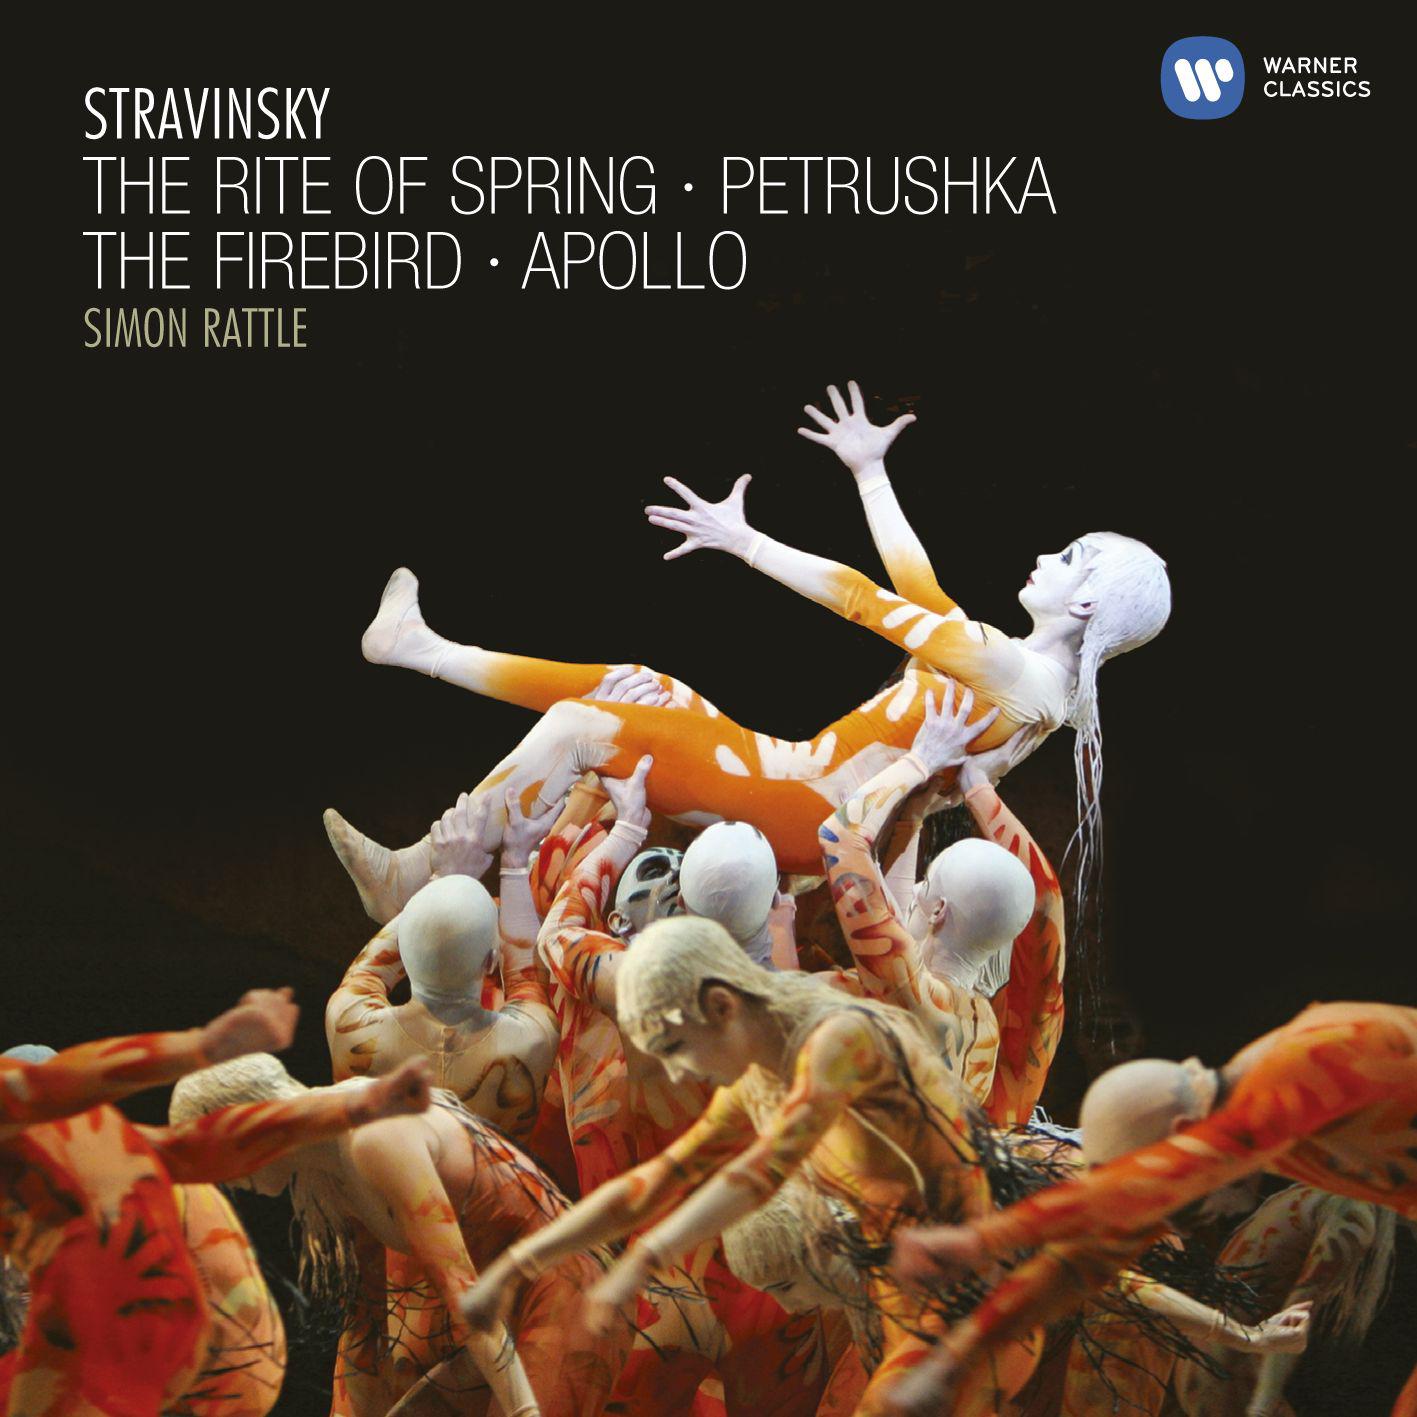 Stravinsky: The Rite of Spring, Petrushka, The Firebird  Apollon musage te